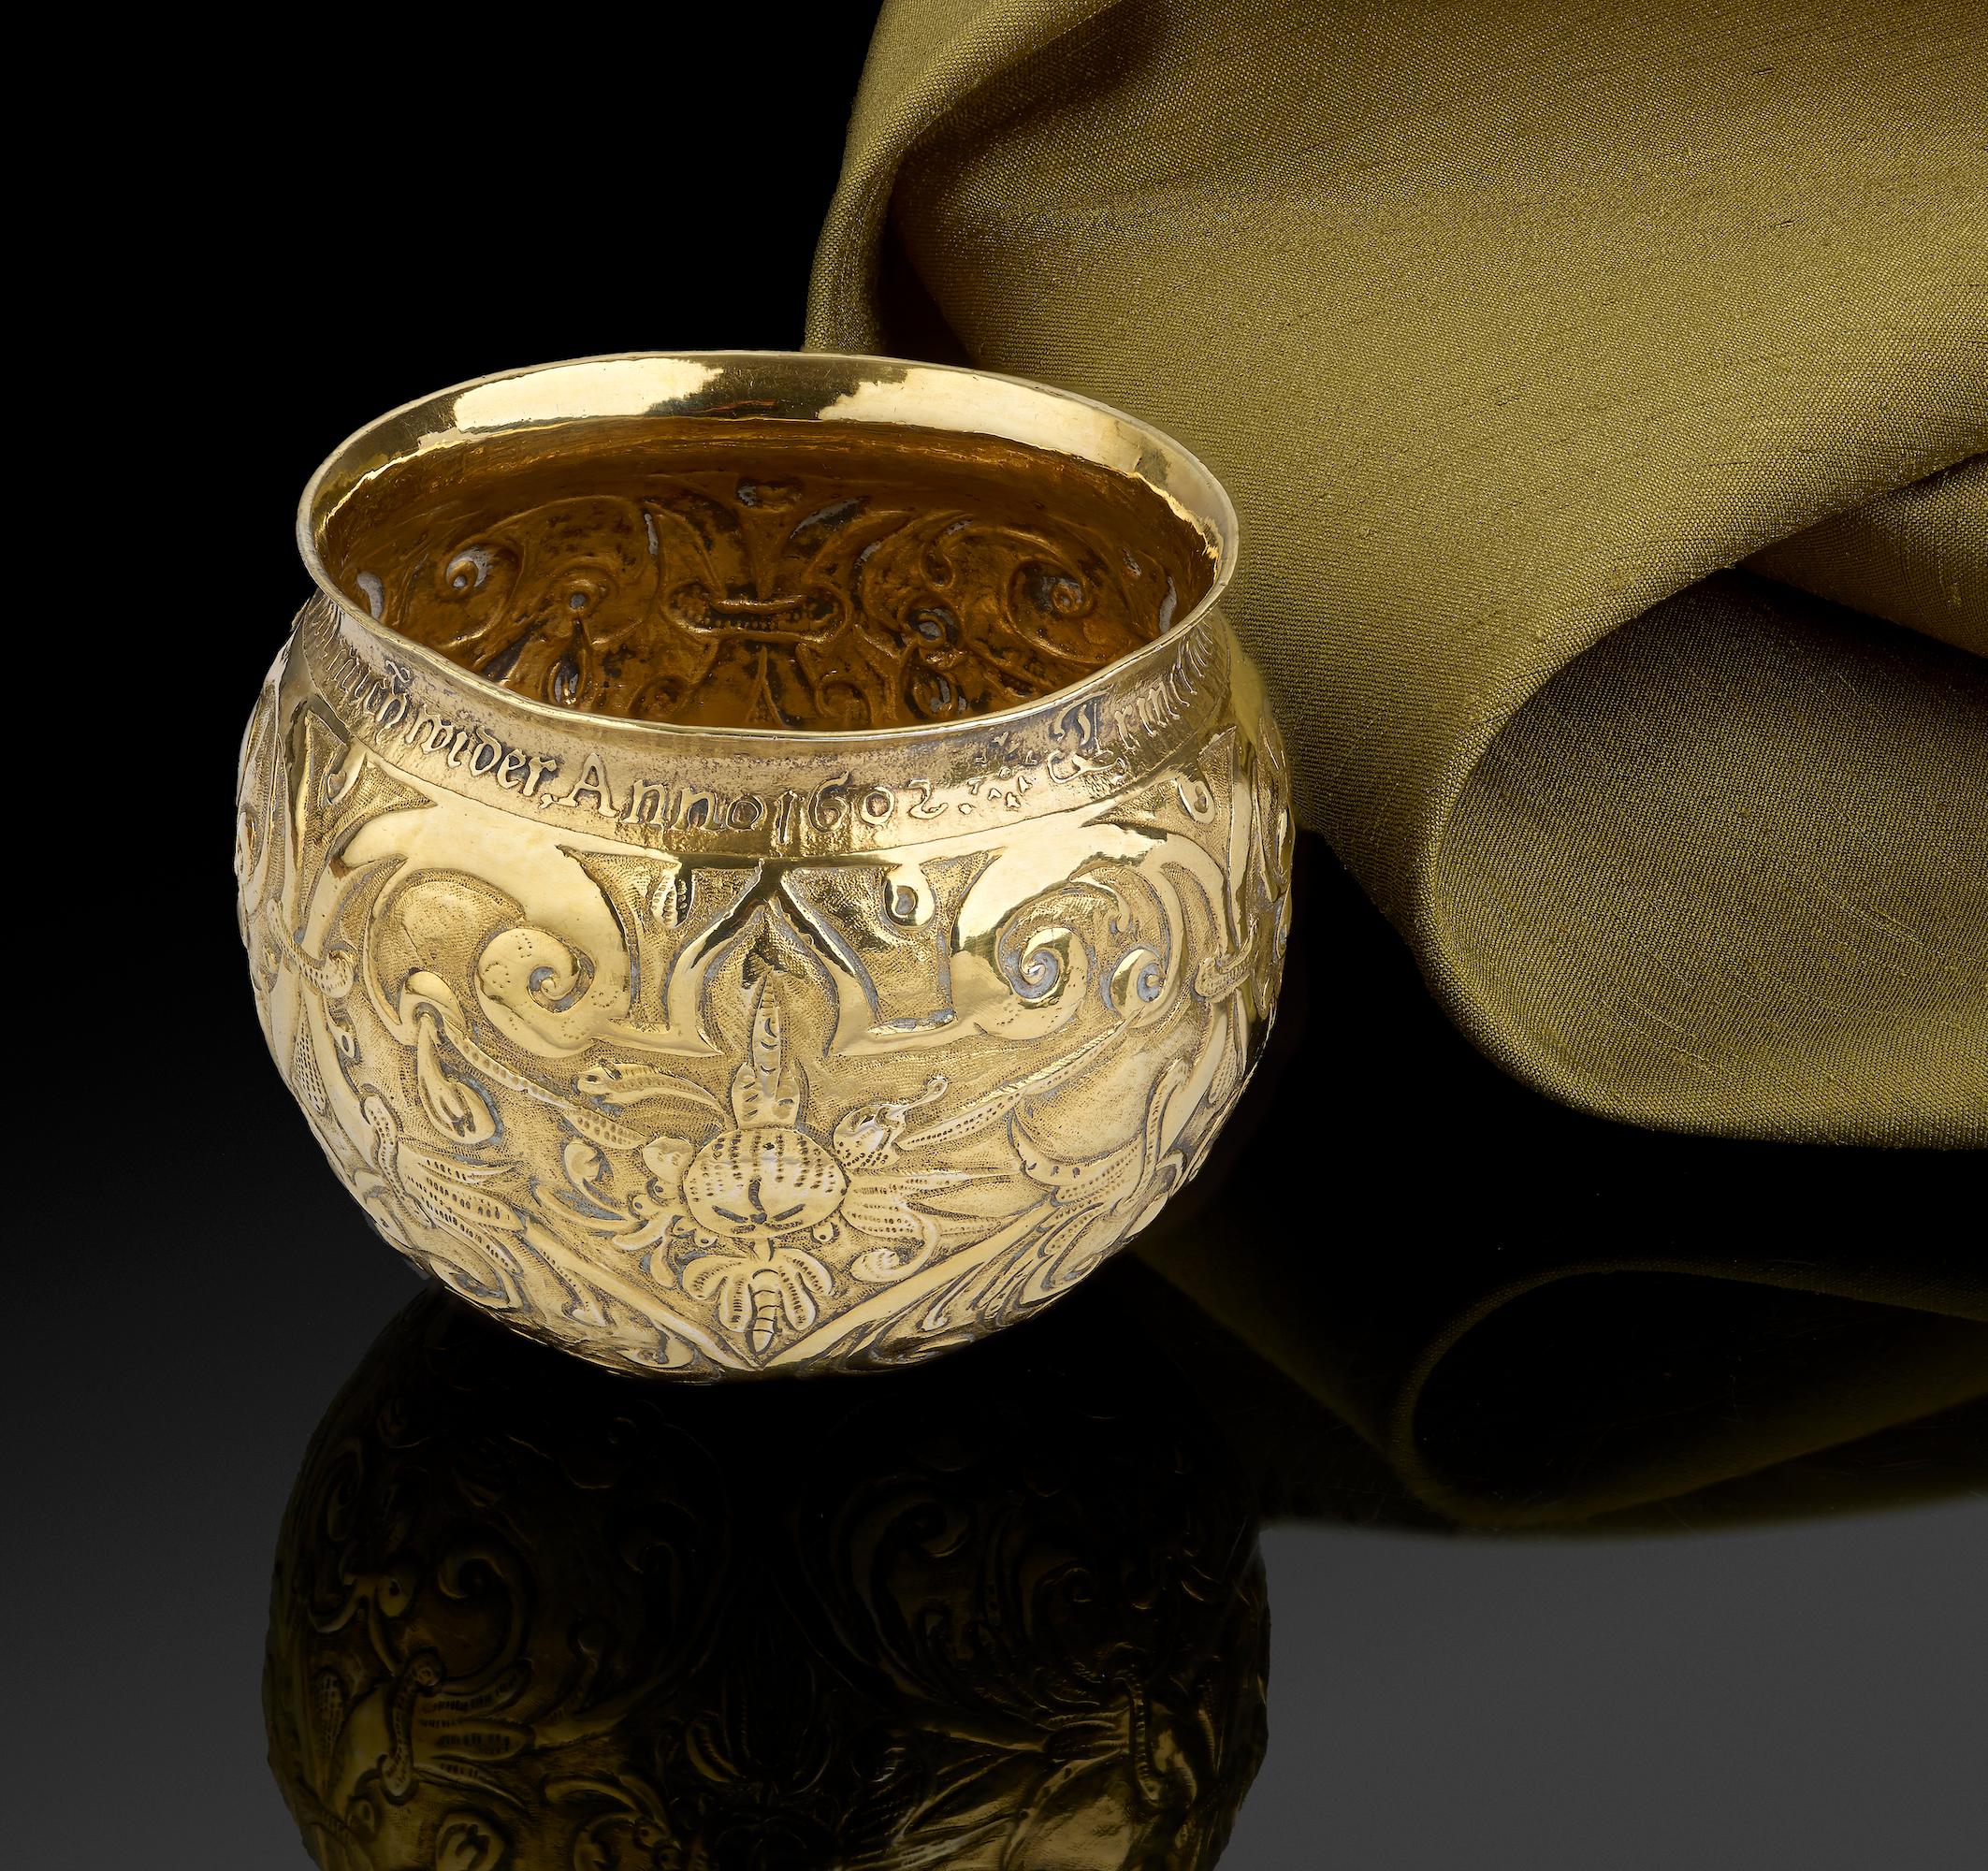 17th Century Rare Antique Silver Tumbler Cup, circa 1600 For Sale